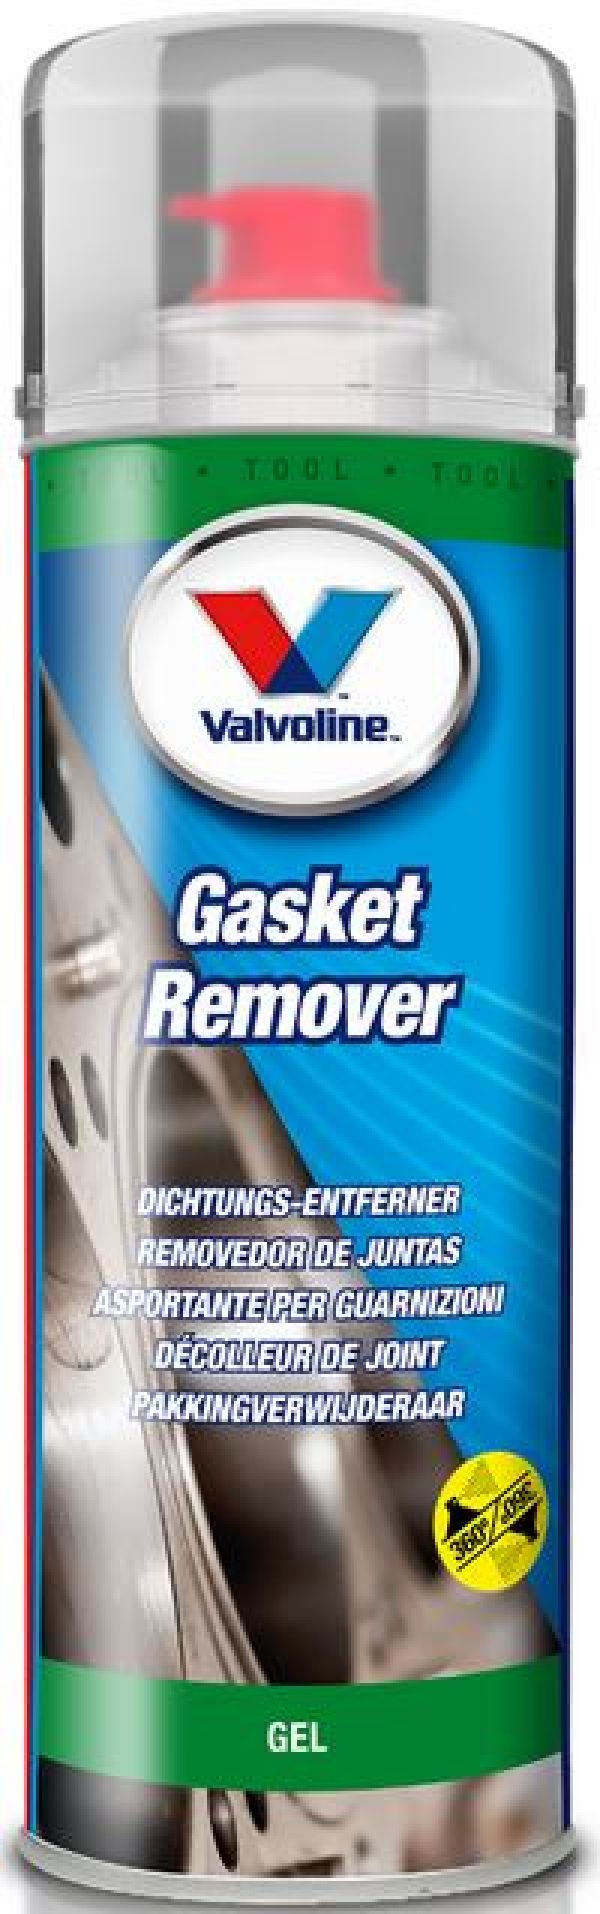 Valvoline Gasket Remover